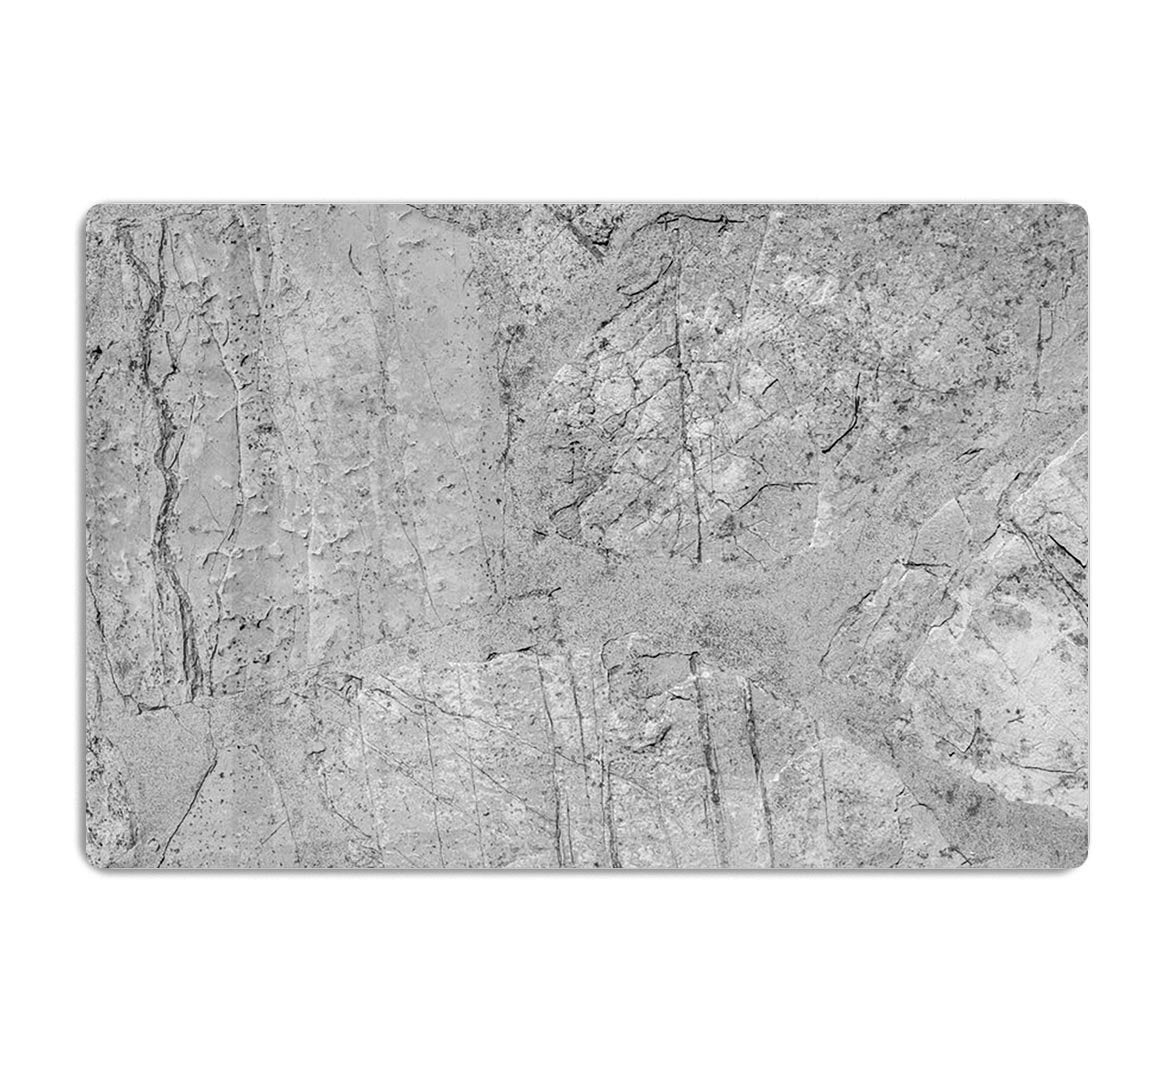 Stone concrete floor HD Metal Print - Canvas Art Rocks - 1